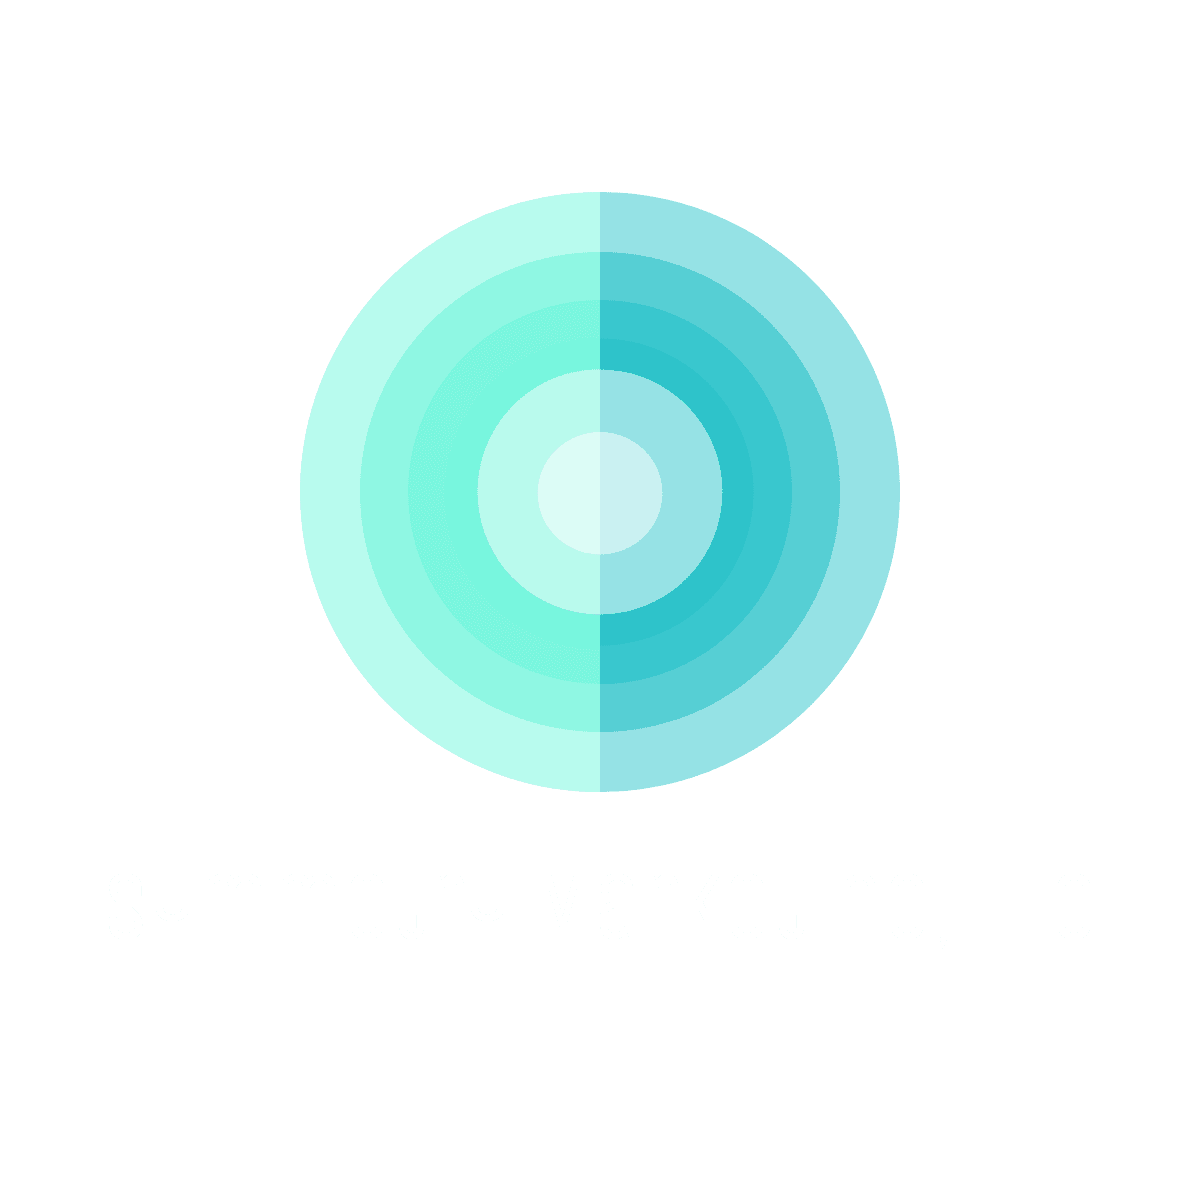 Symmetry Marketing